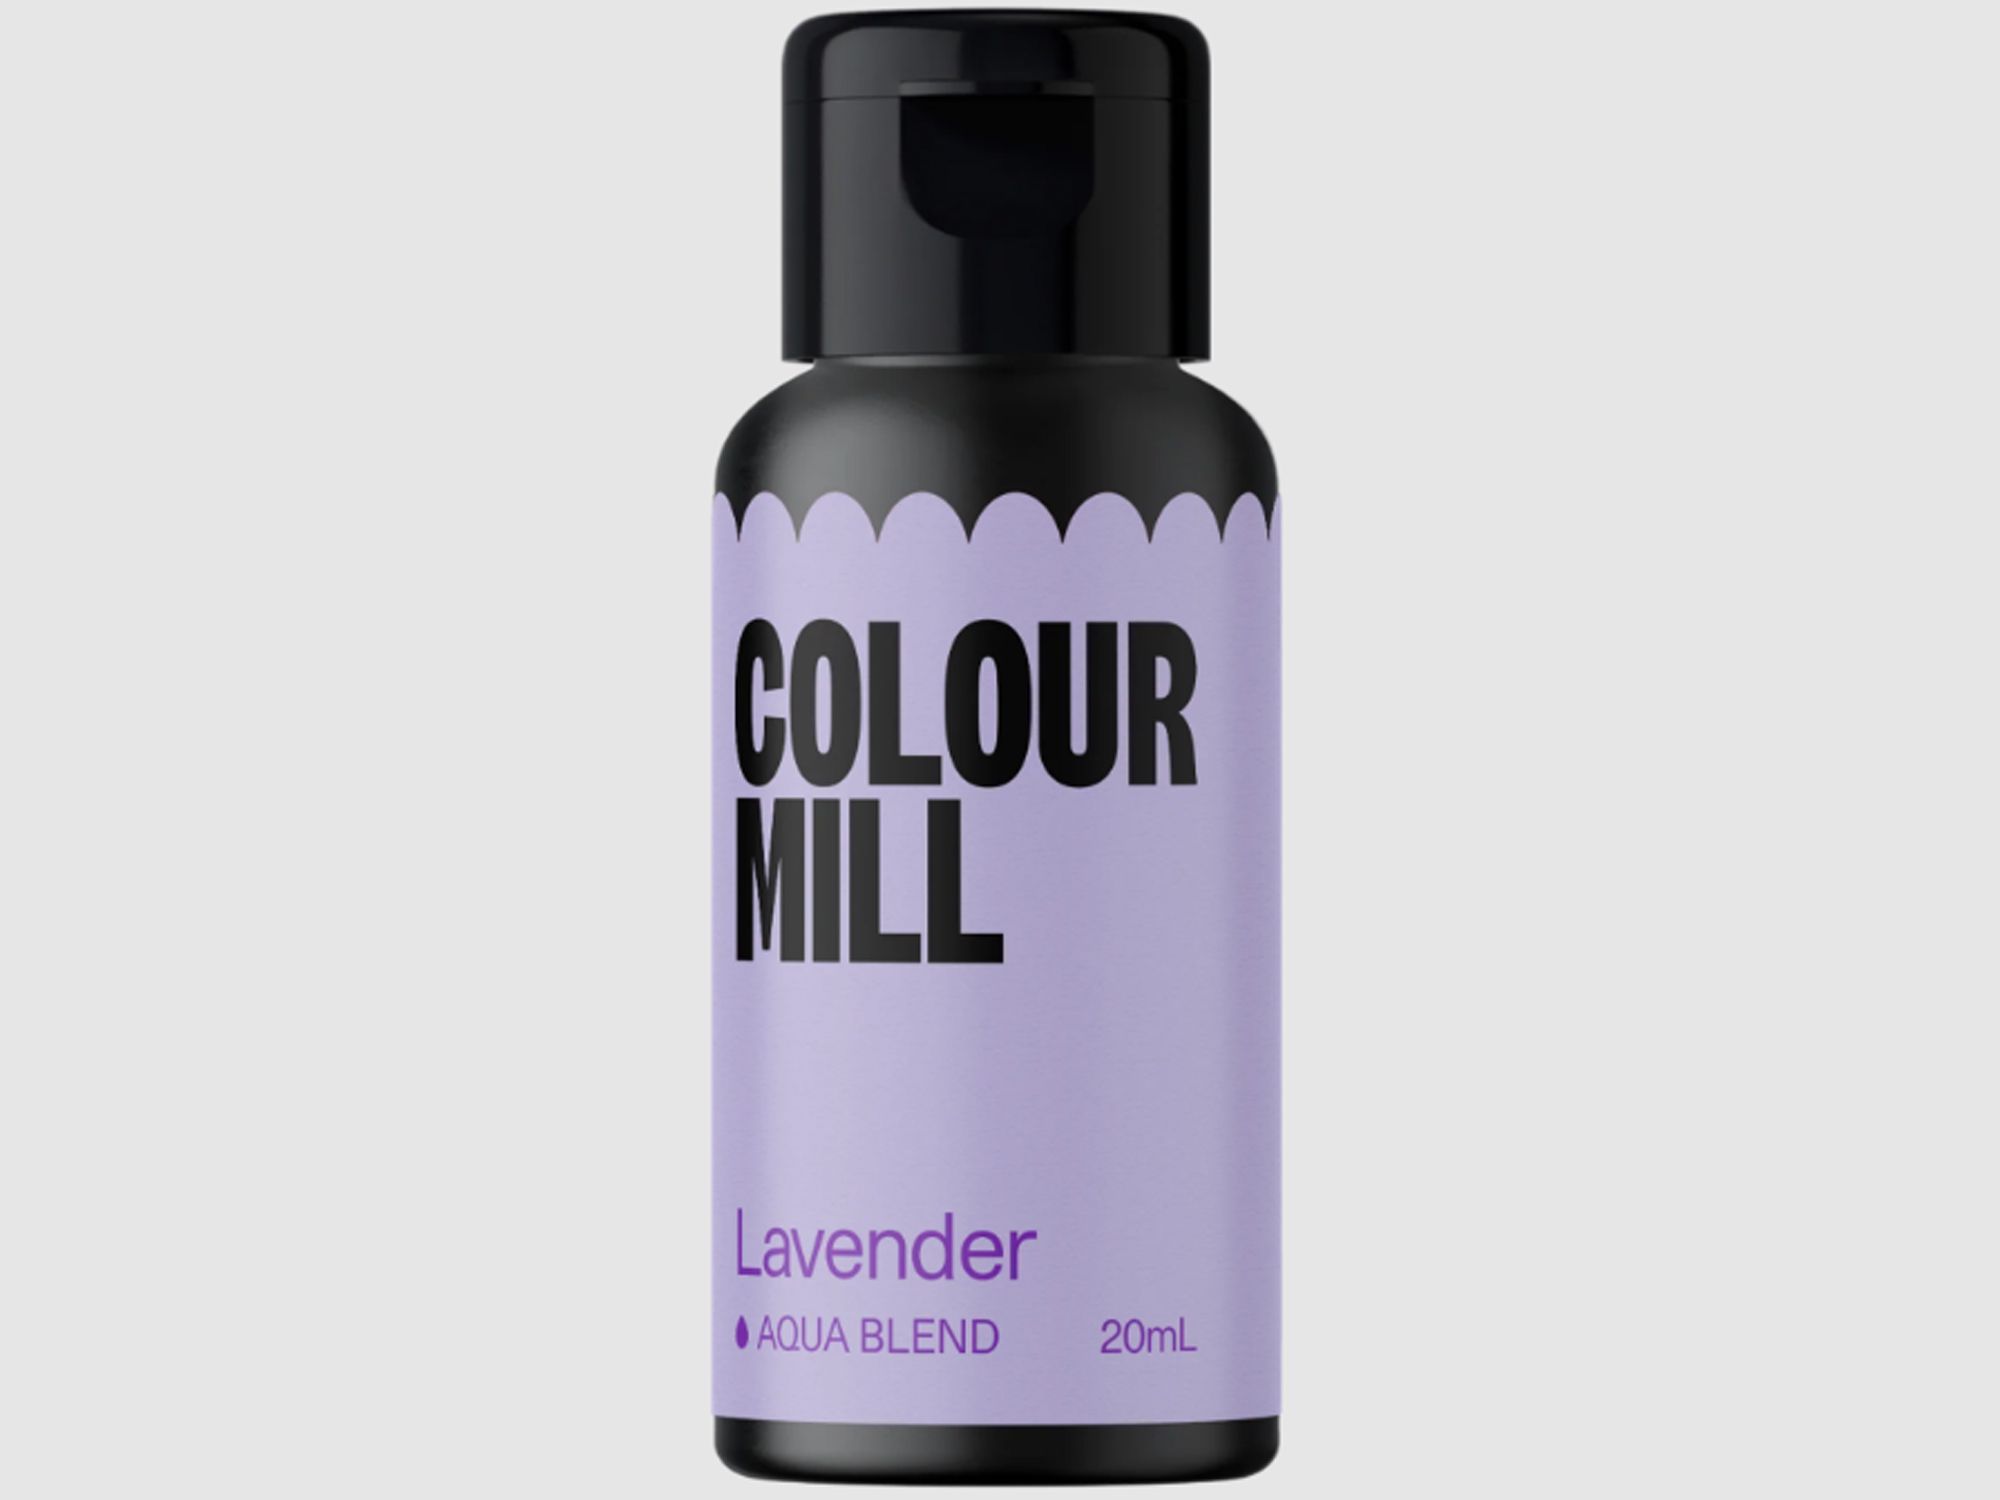 Colour Mill Lavender (Aqua Blend) 20ml